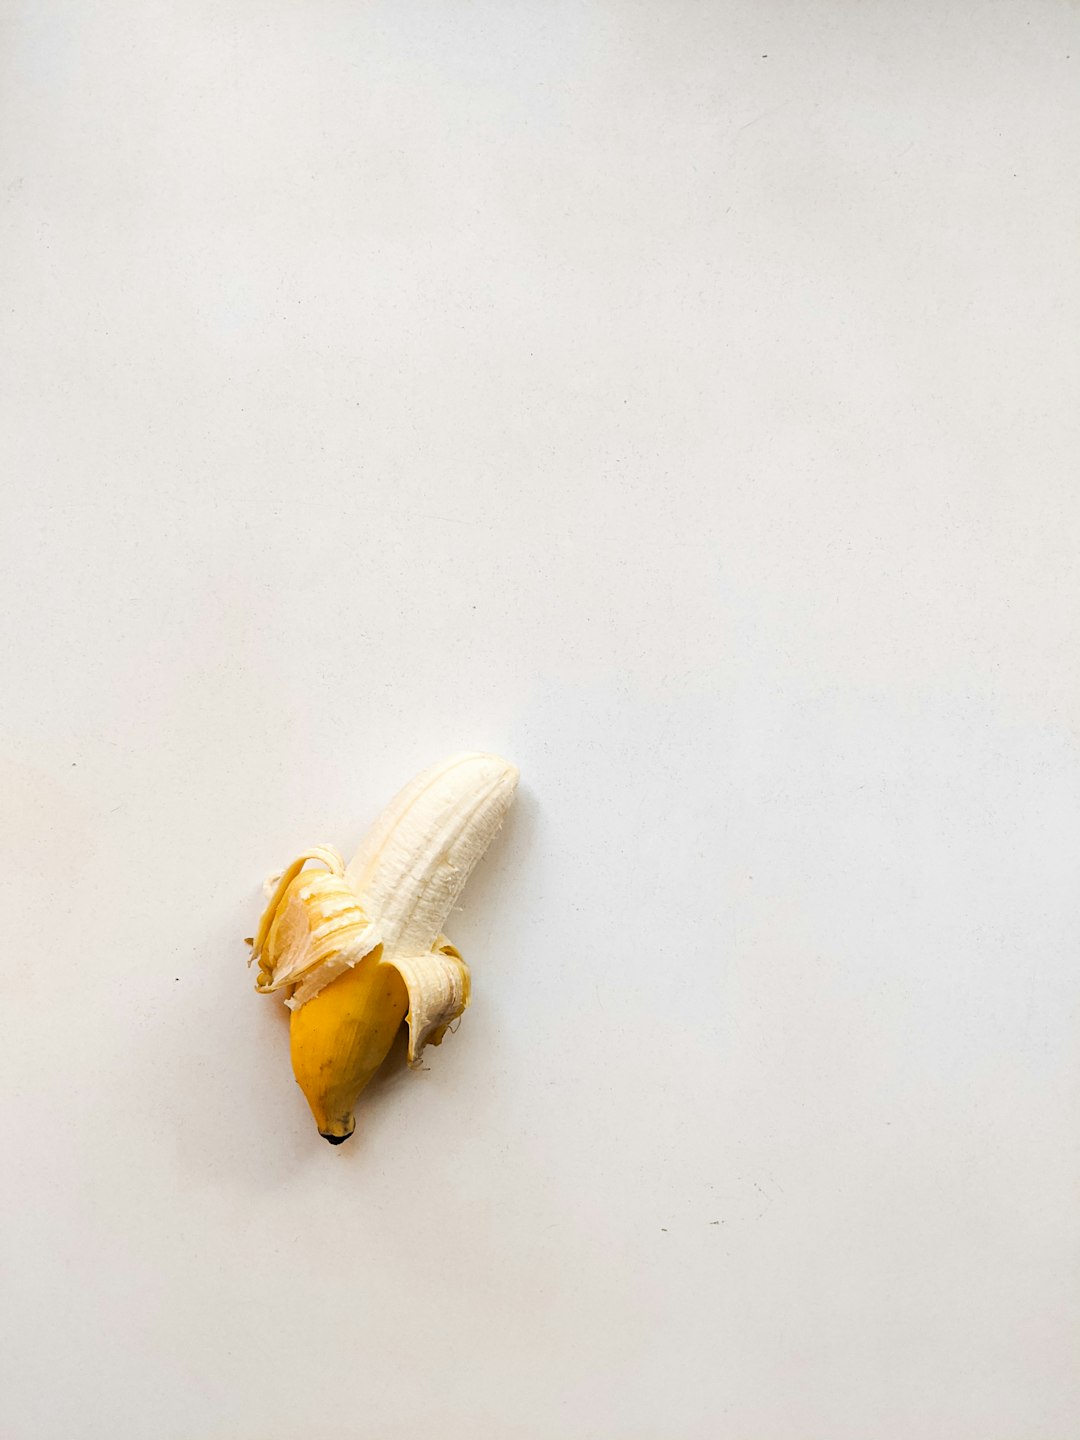 yellow banana peel on white table